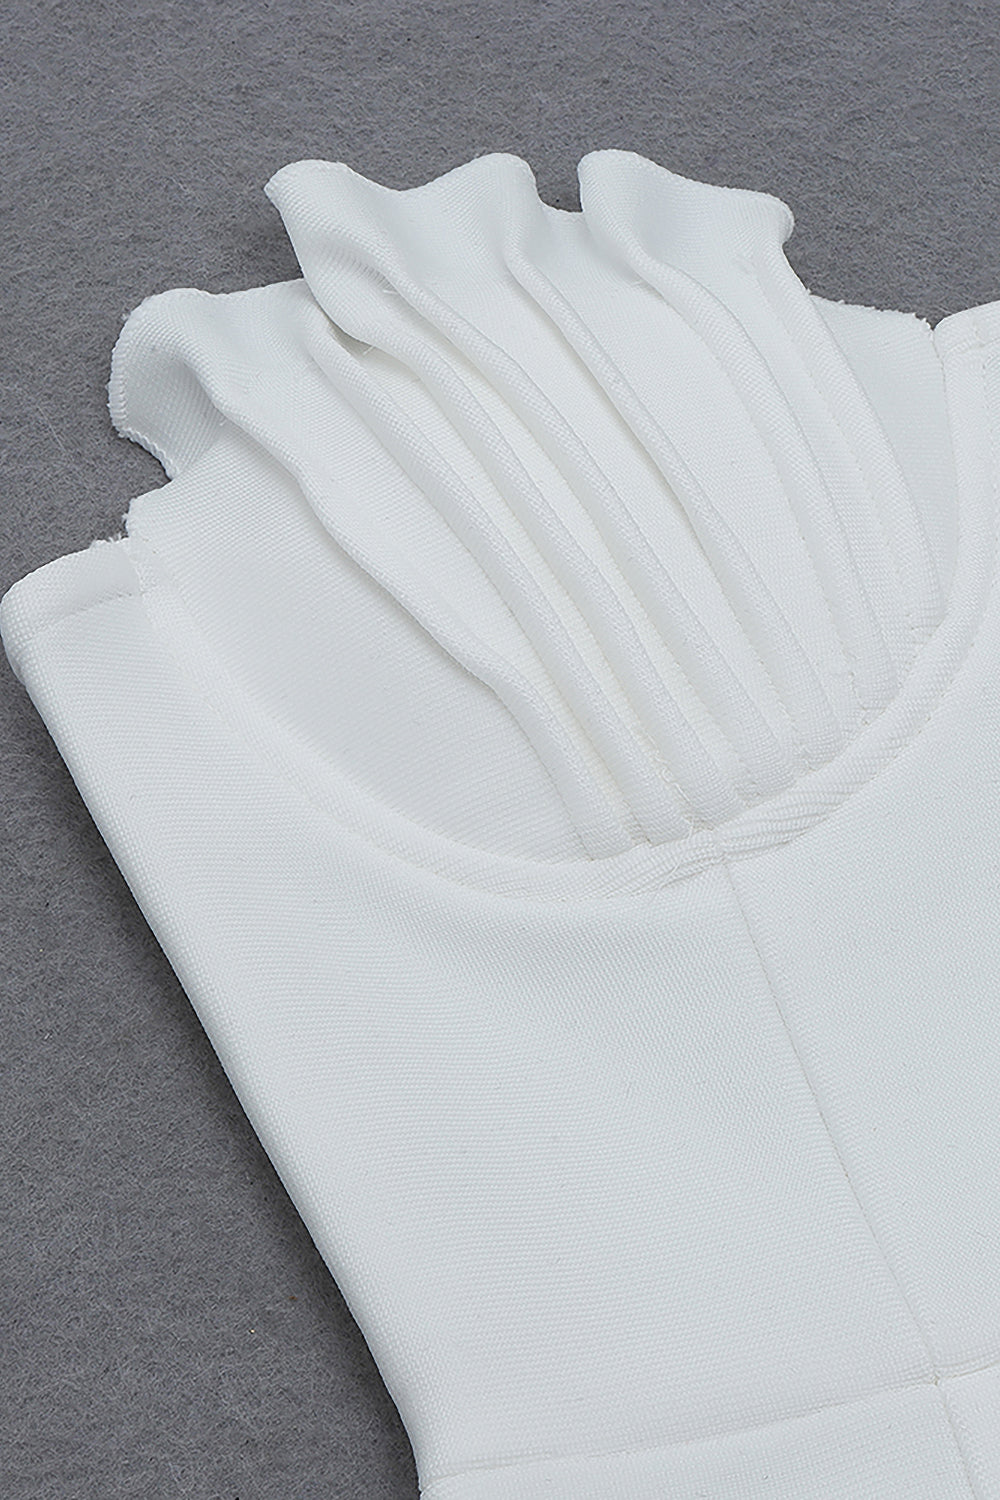 White Strapless Pleated Knee Length Bandage Dress - IULOVER